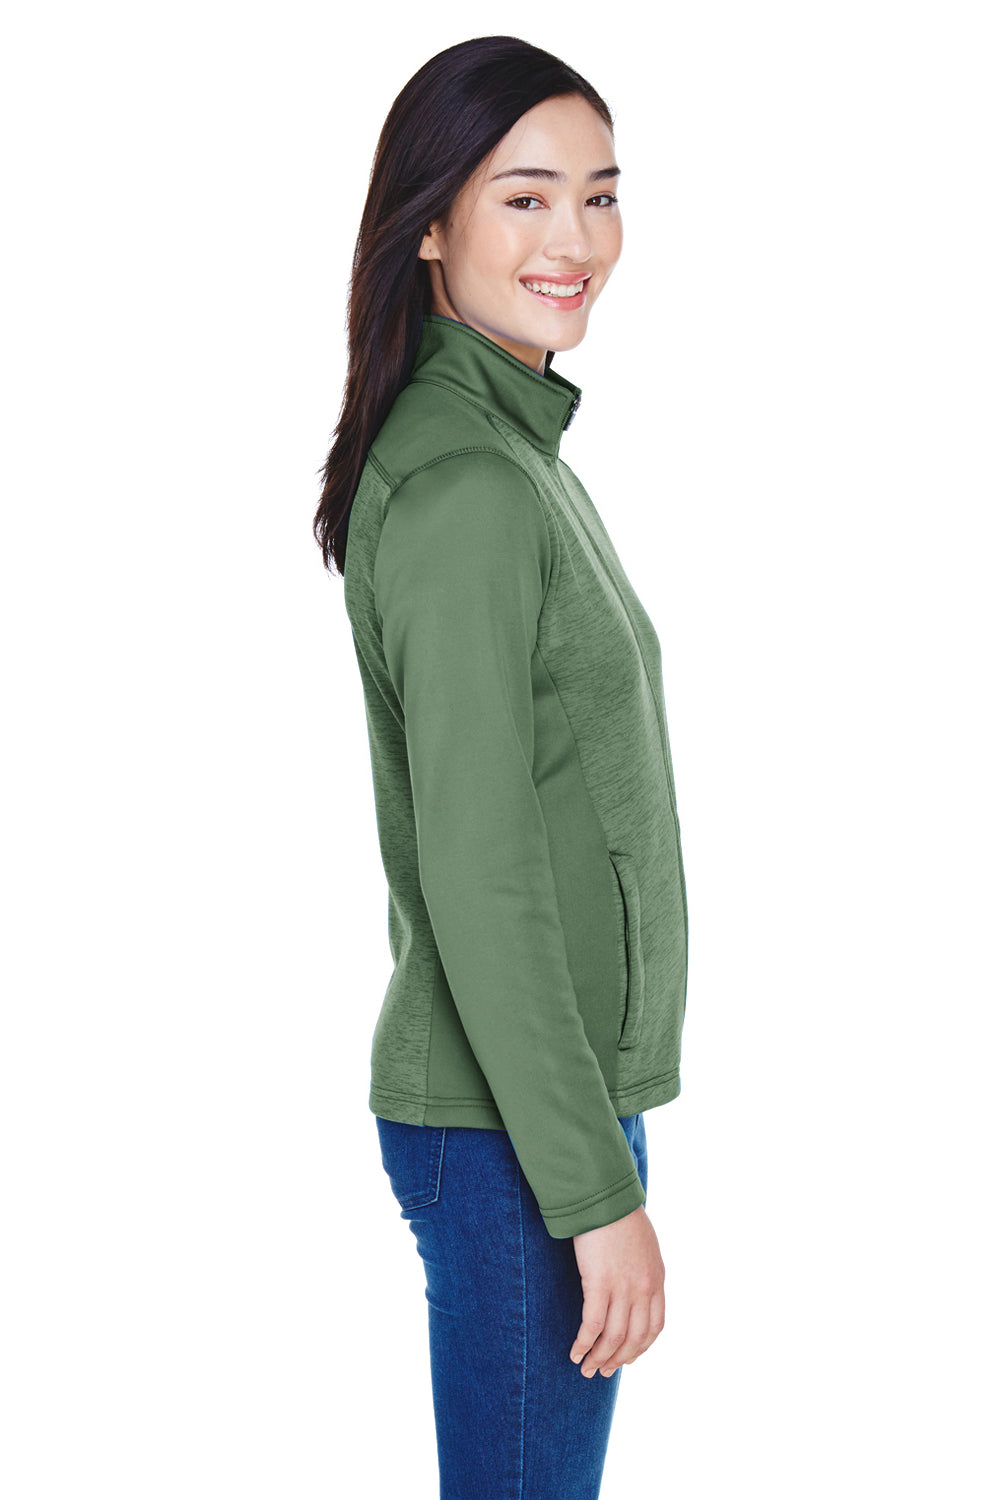 Devon & Jones DG796W Womens Newbury Fleece Full Zip Sweatshirt Forest Green Side